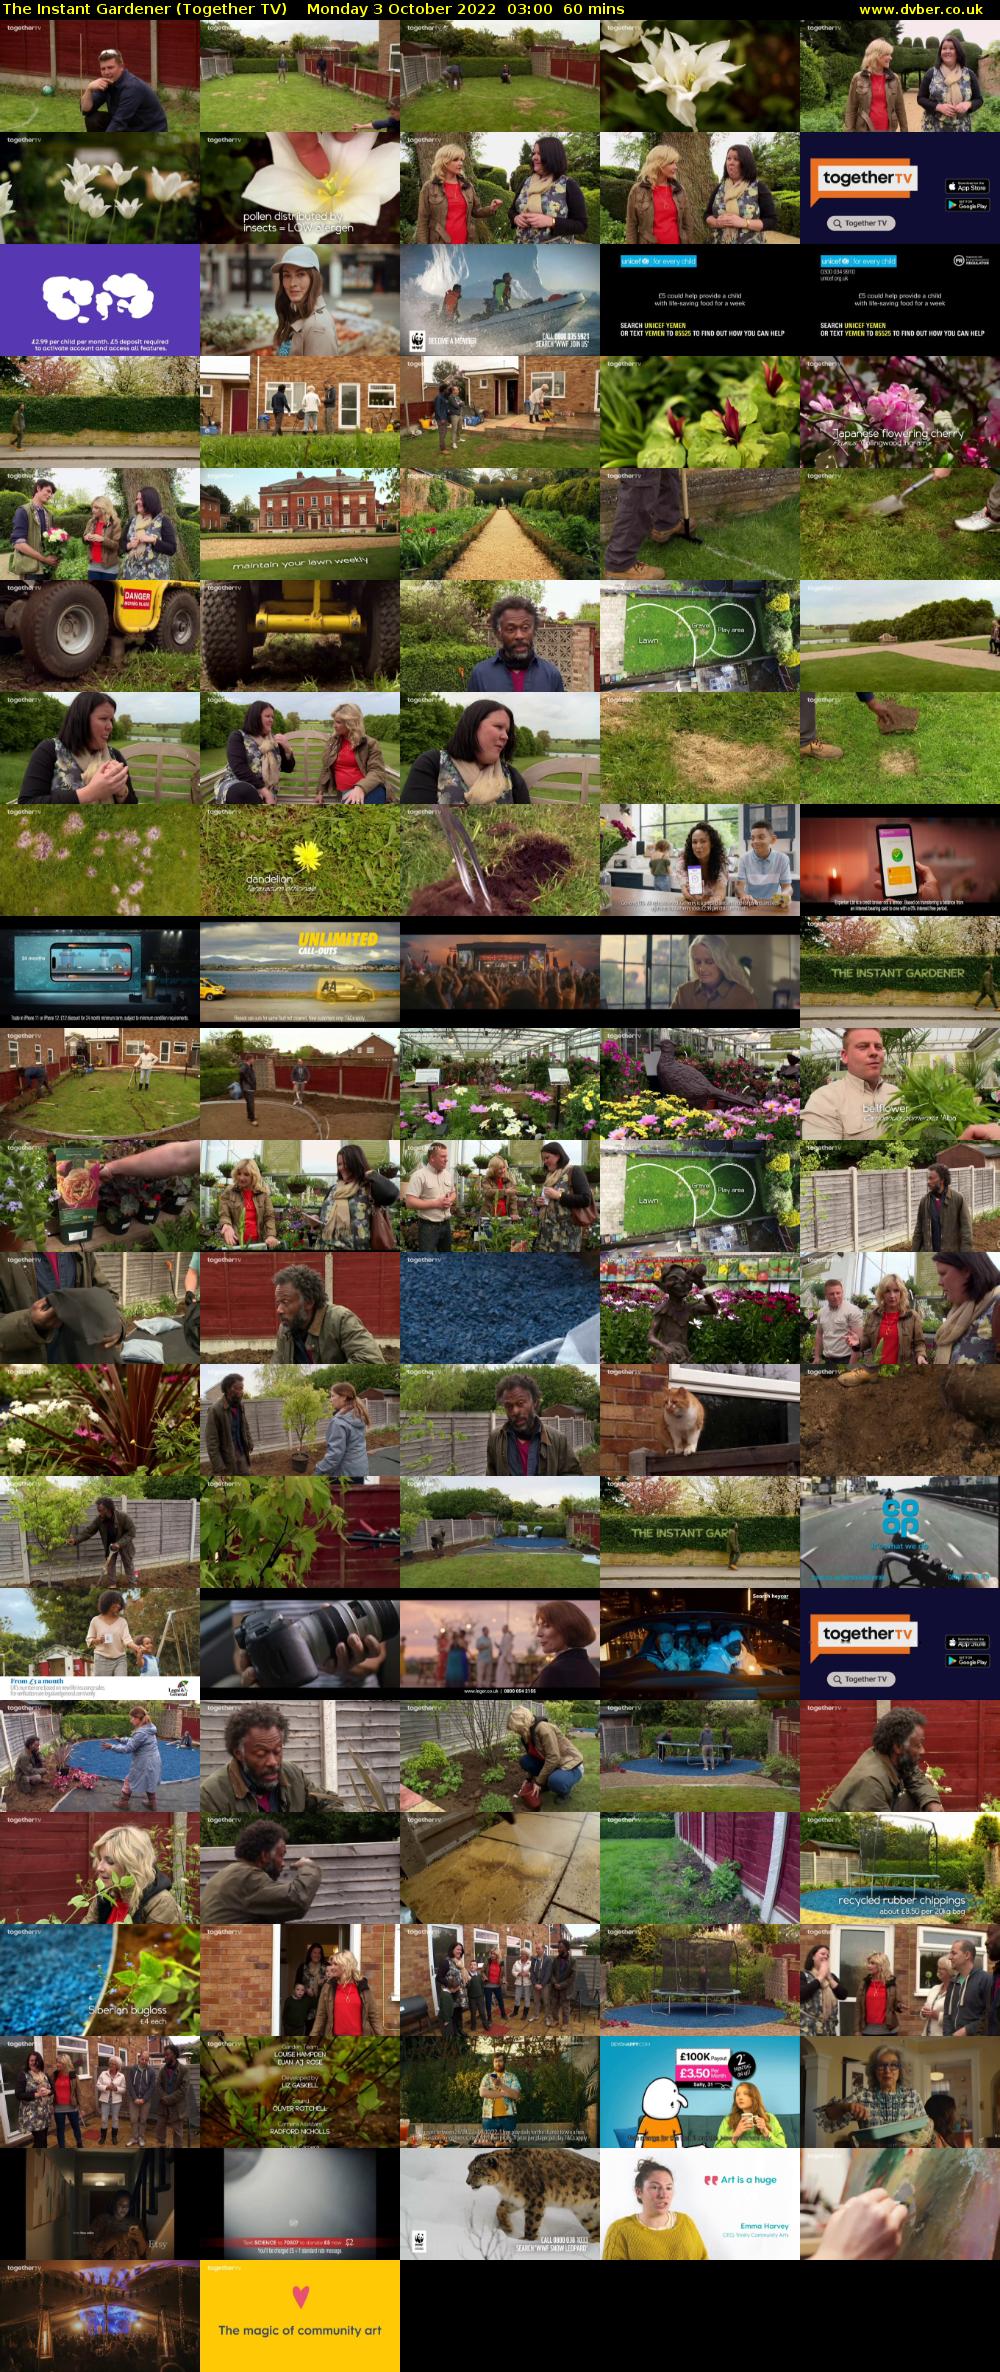 The Instant Gardener (Together TV) Monday 3 October 2022 03:00 - 04:00